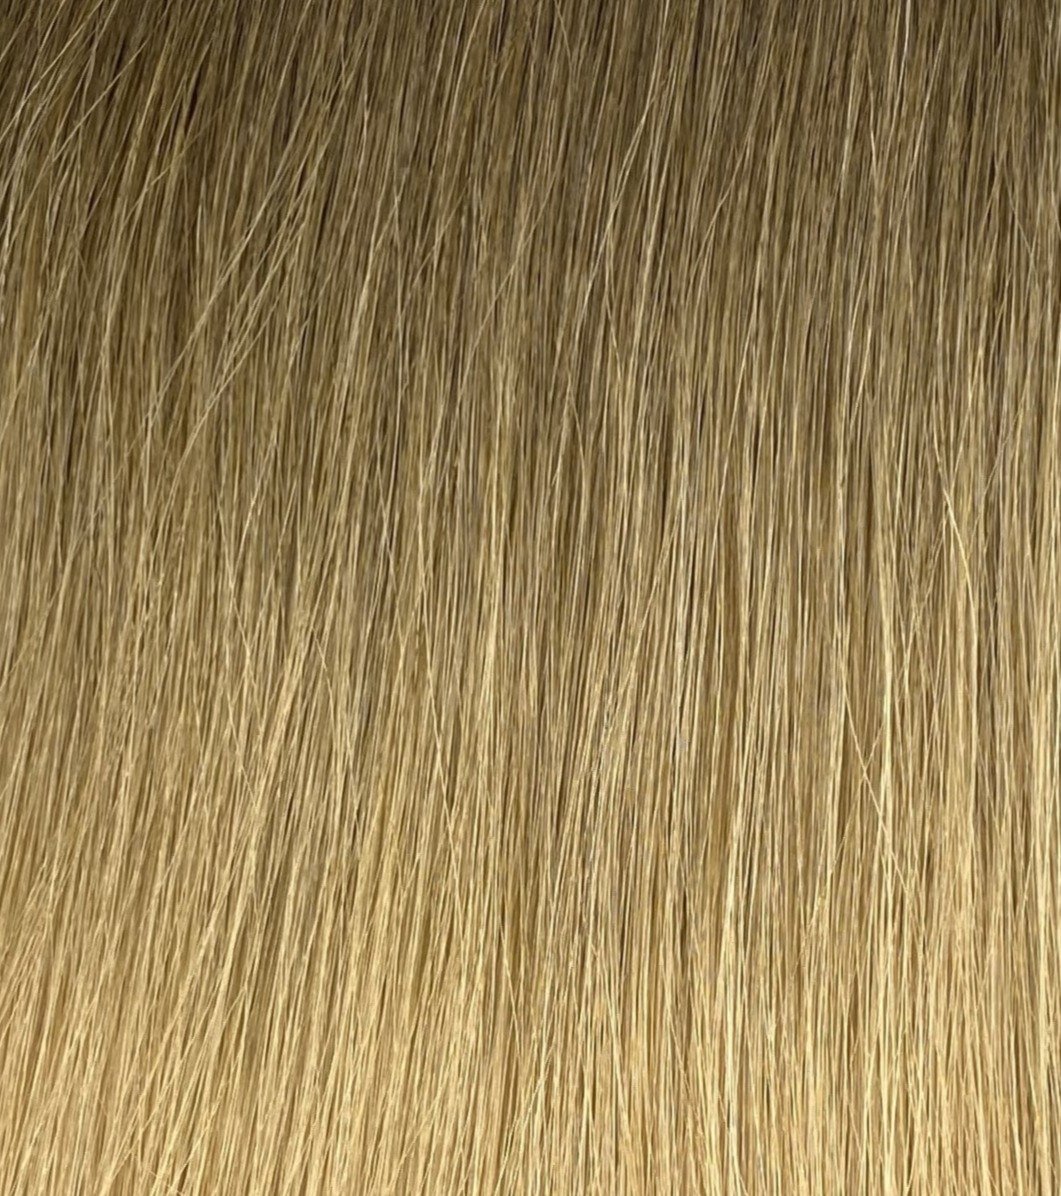 Double Weft Ombre #8 & DB4 - 20 Inches - Dark Blonde into Dark Golden Blonde - 60 Grams